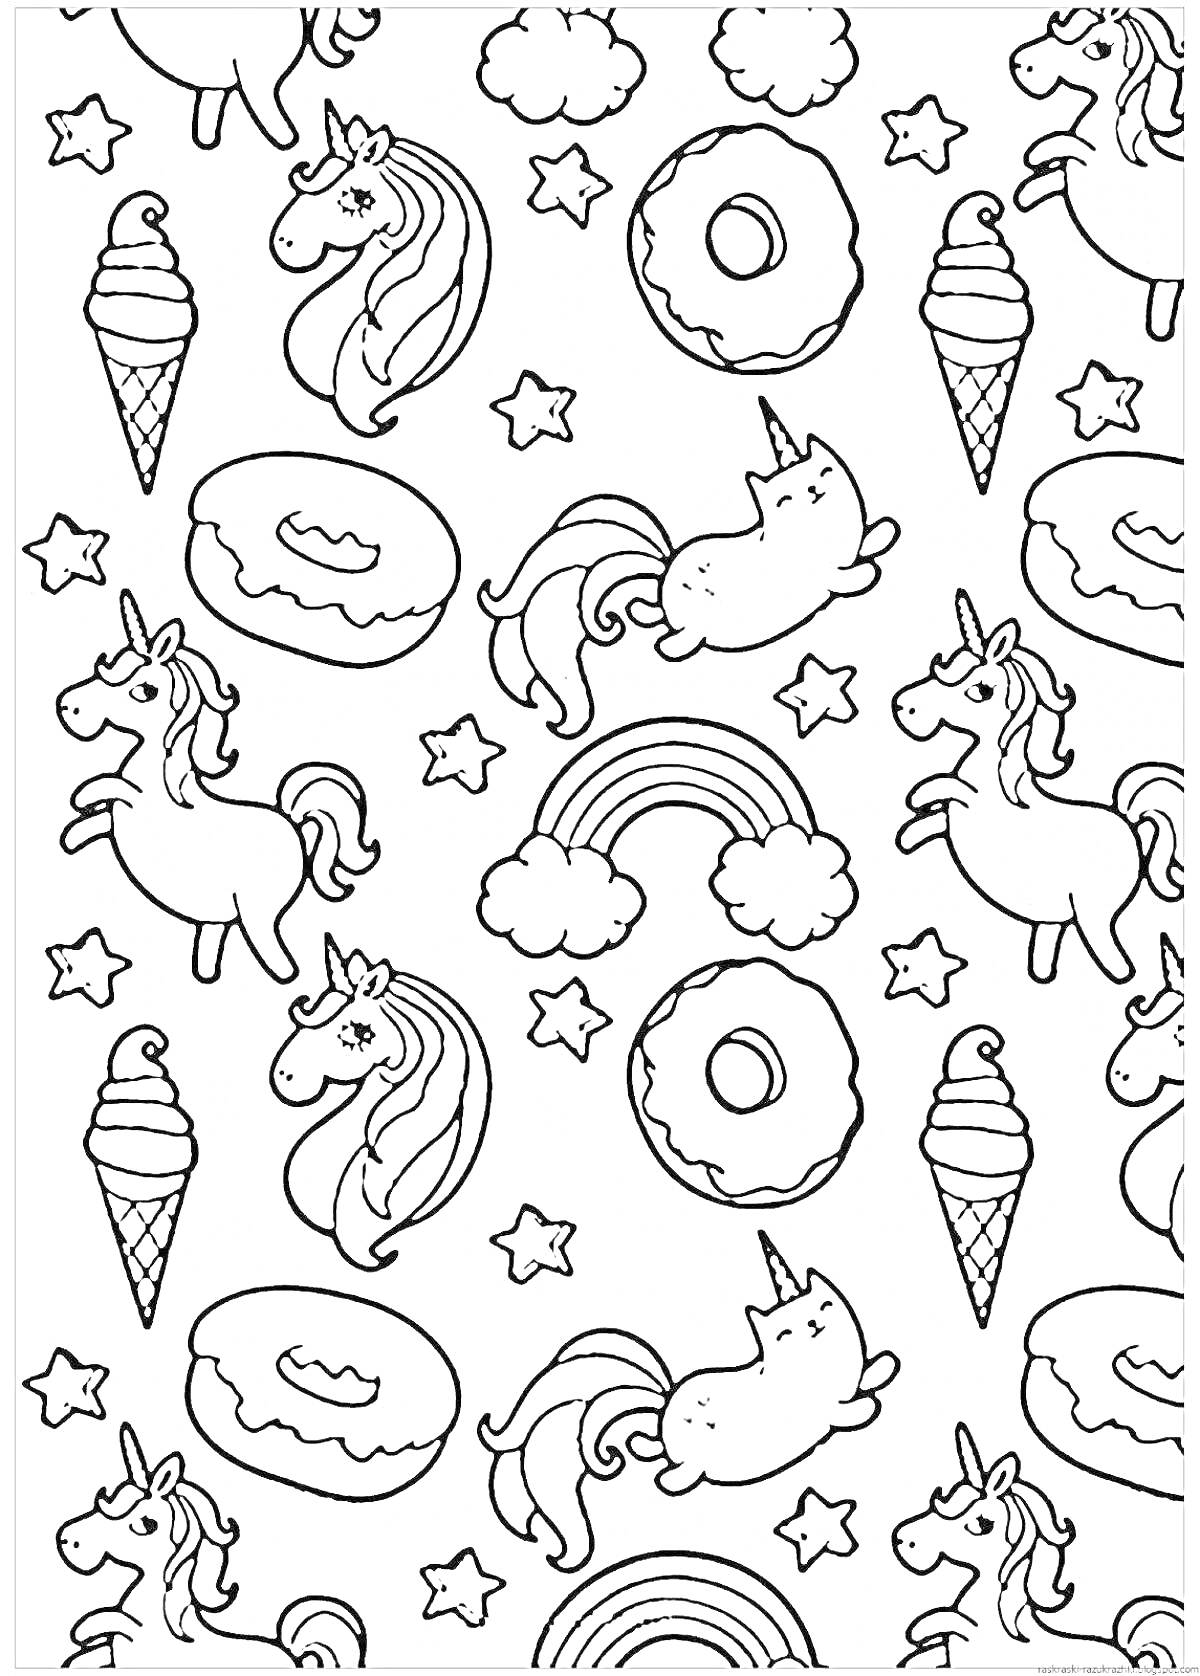 На раскраске изображено: Единороги, Мороженое, Пони, Радуги, Облака, Звезды, Кот